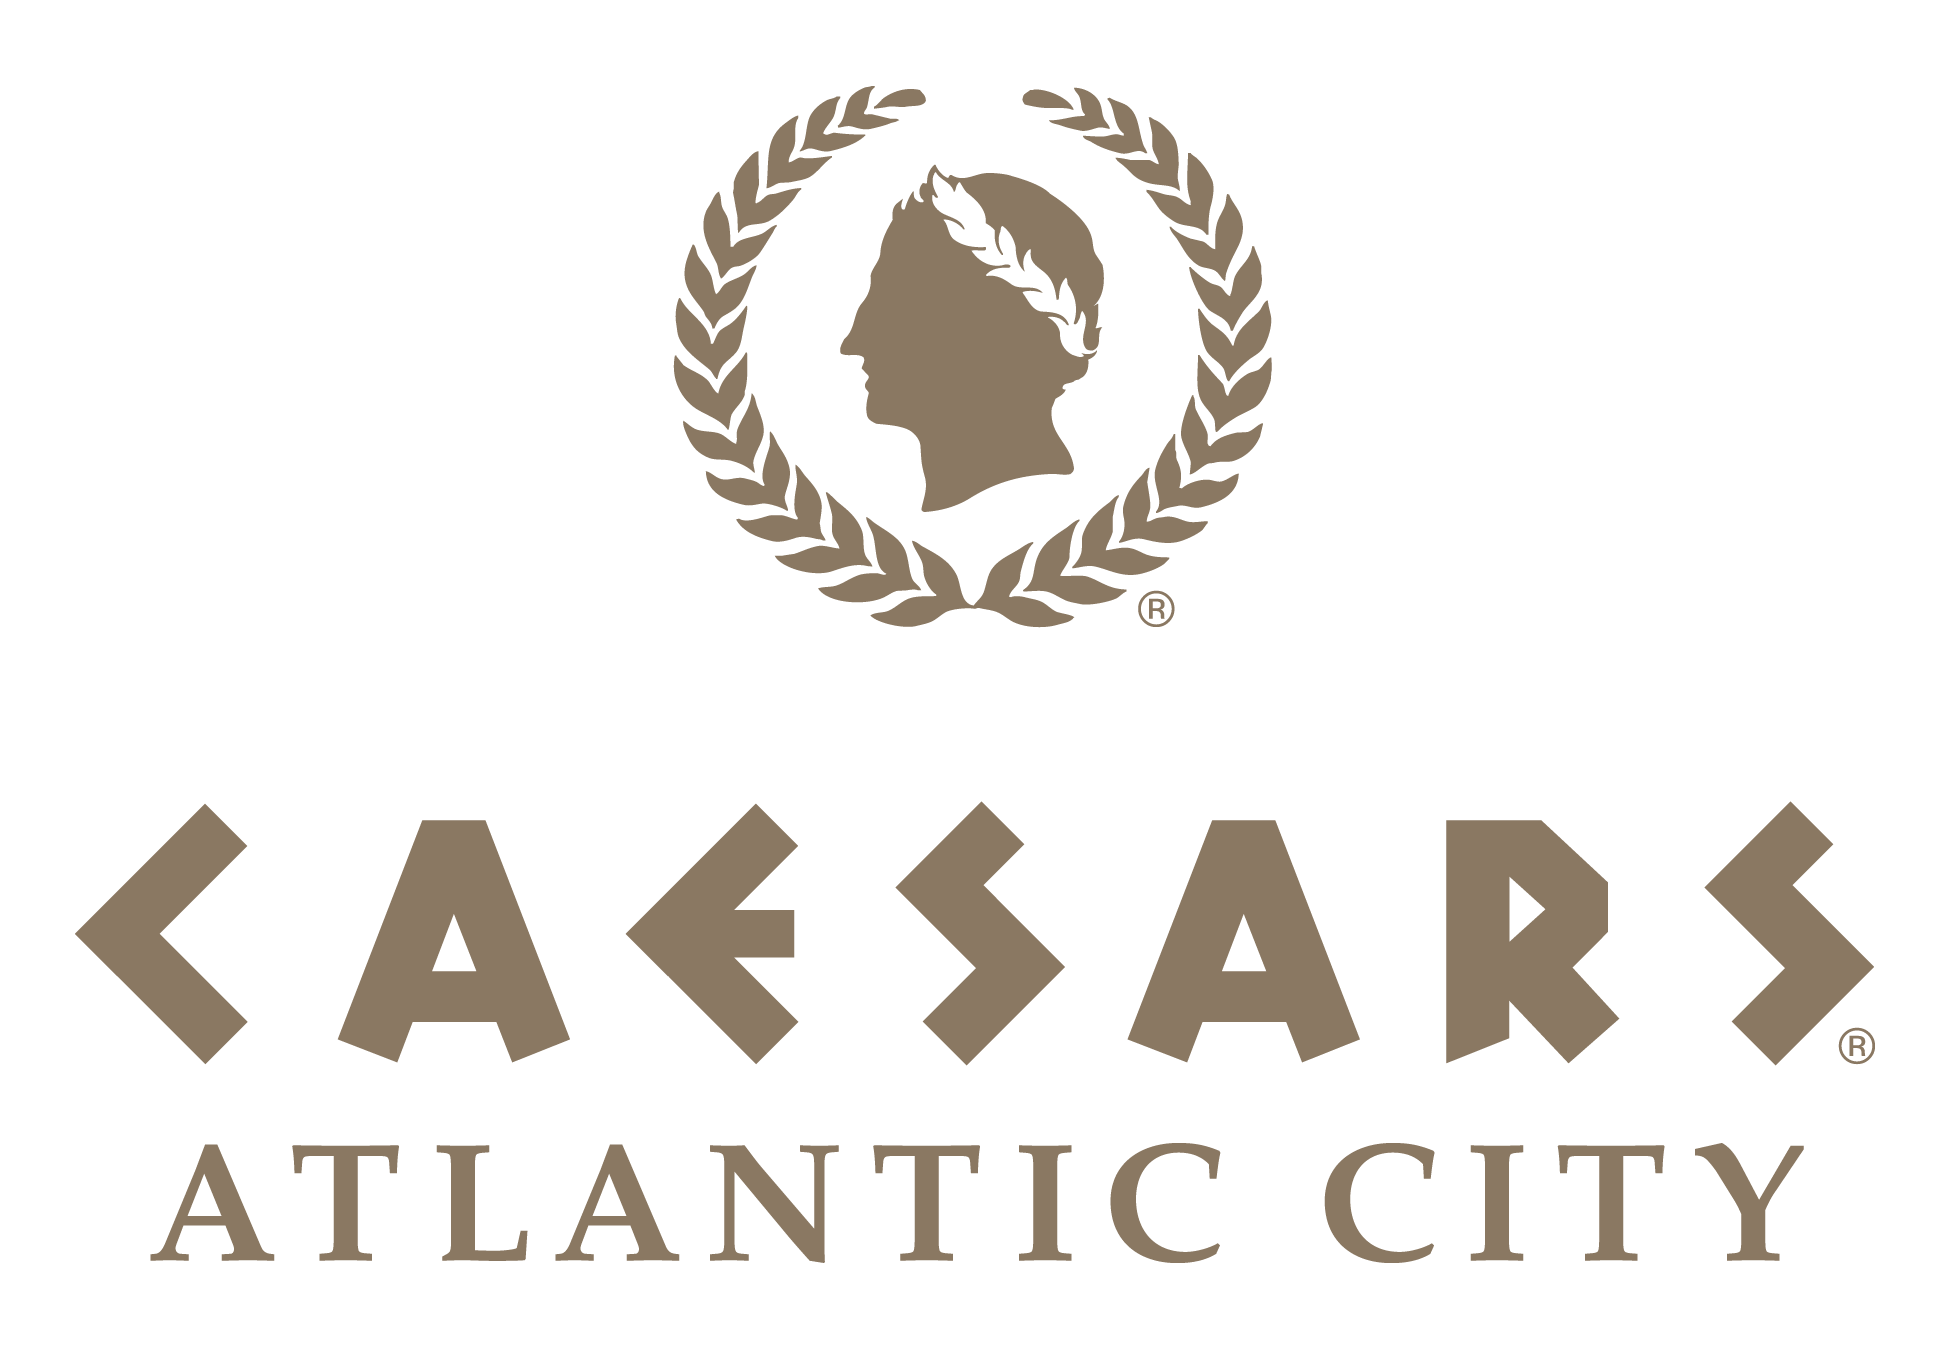 Caesars Atlantic City Logo - Caesars Atlantic City Photo Gallery - Caesars Entertainment